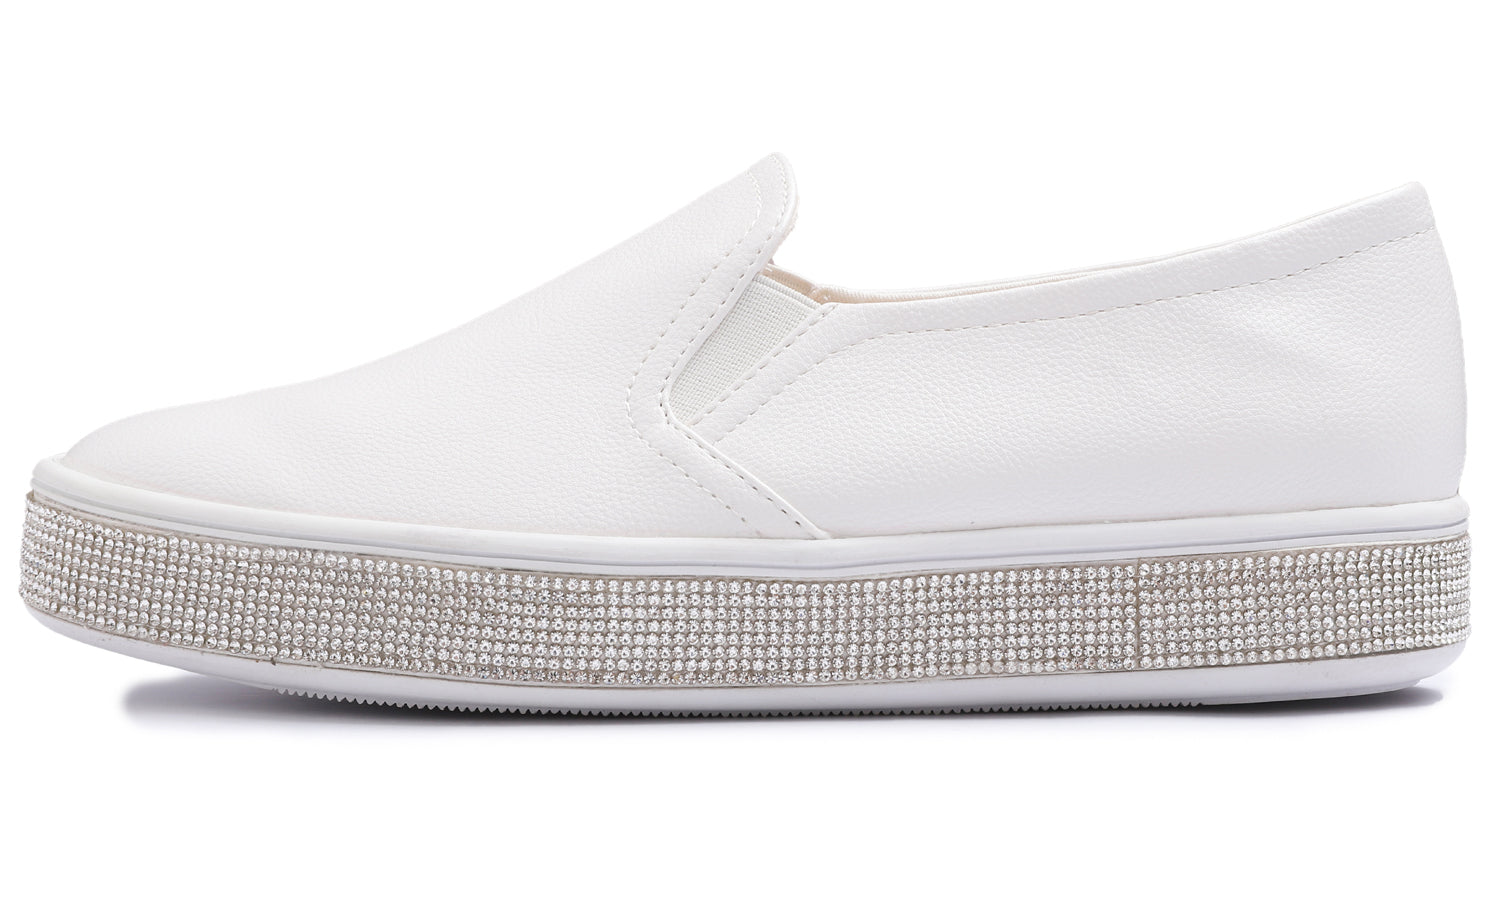 Feversole Women's Fashion Slip-On Sneaker Casual Platform Loafers White Silver Rhinestone Shoes